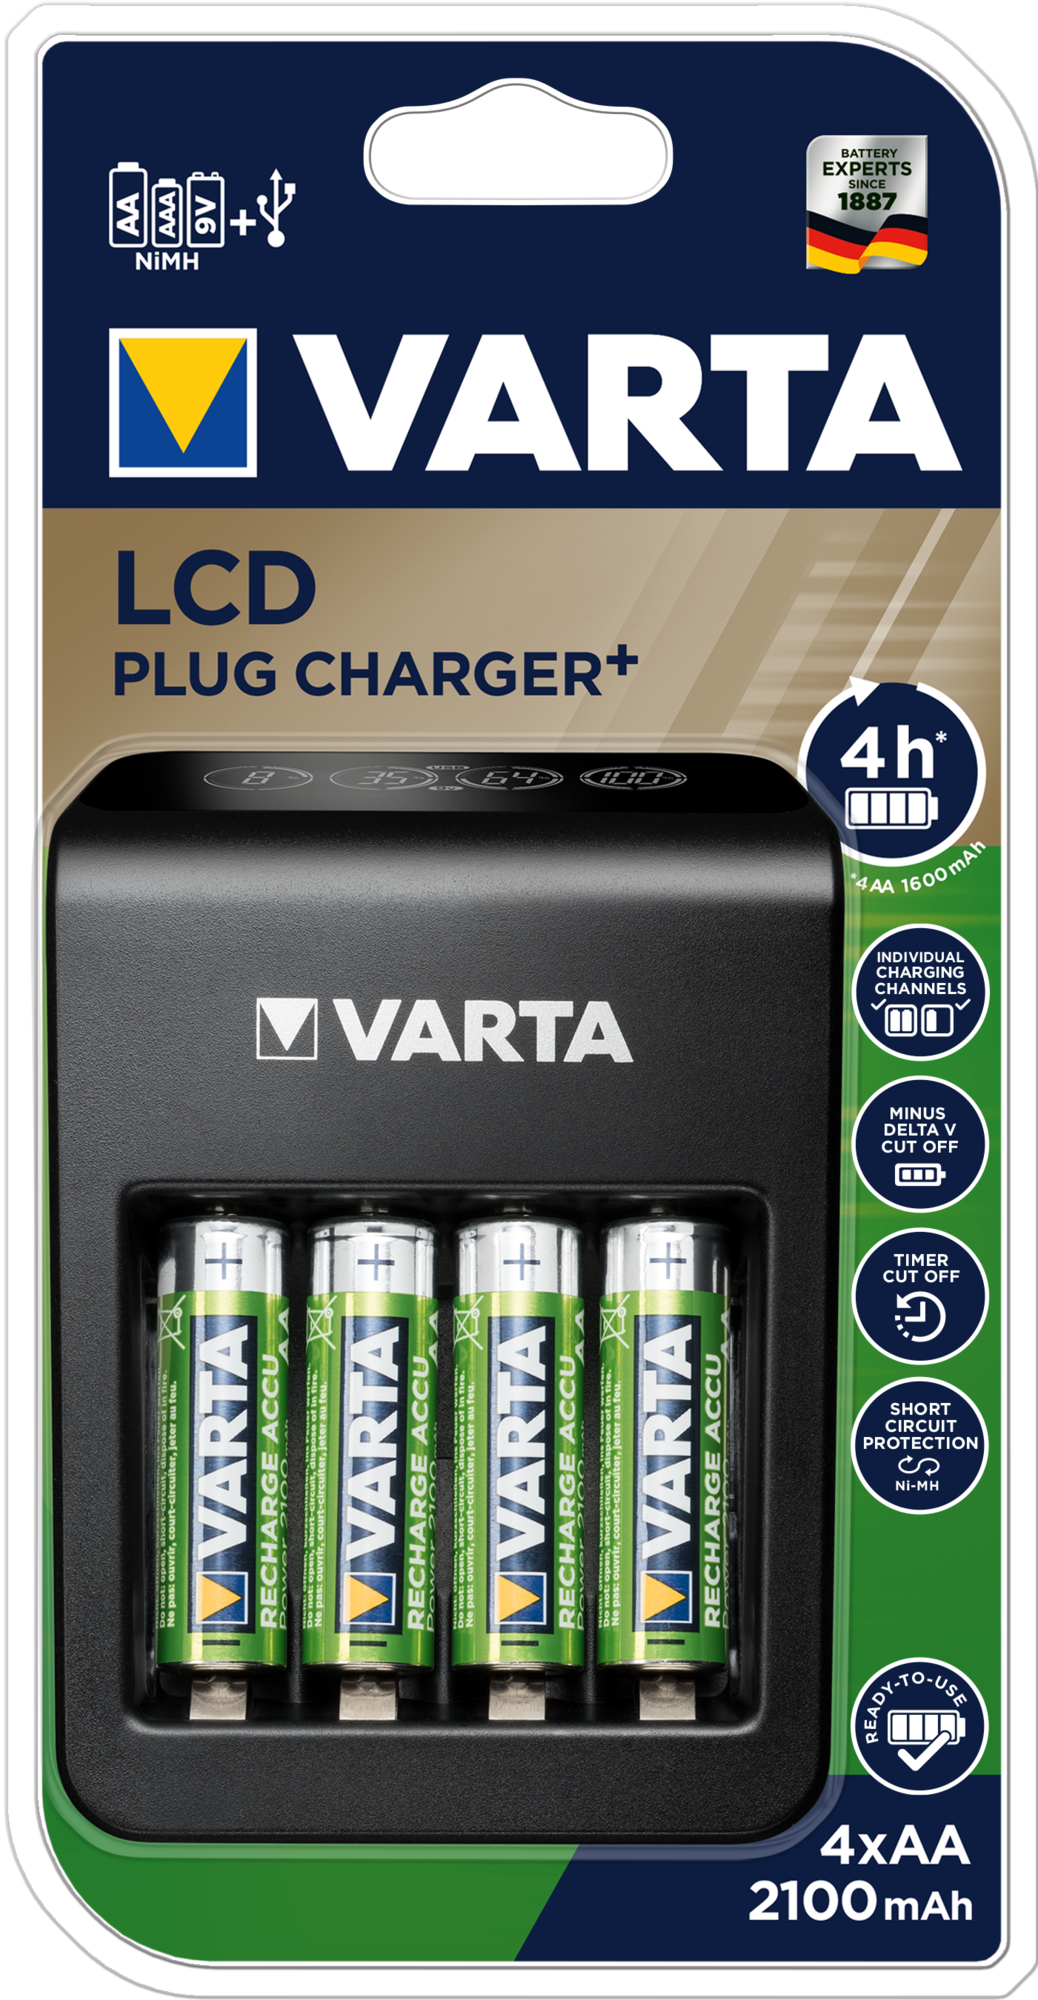 VARTA LCD Plug Charger 56706 57687101441 inkl. avec 4x AA, 2100mAh